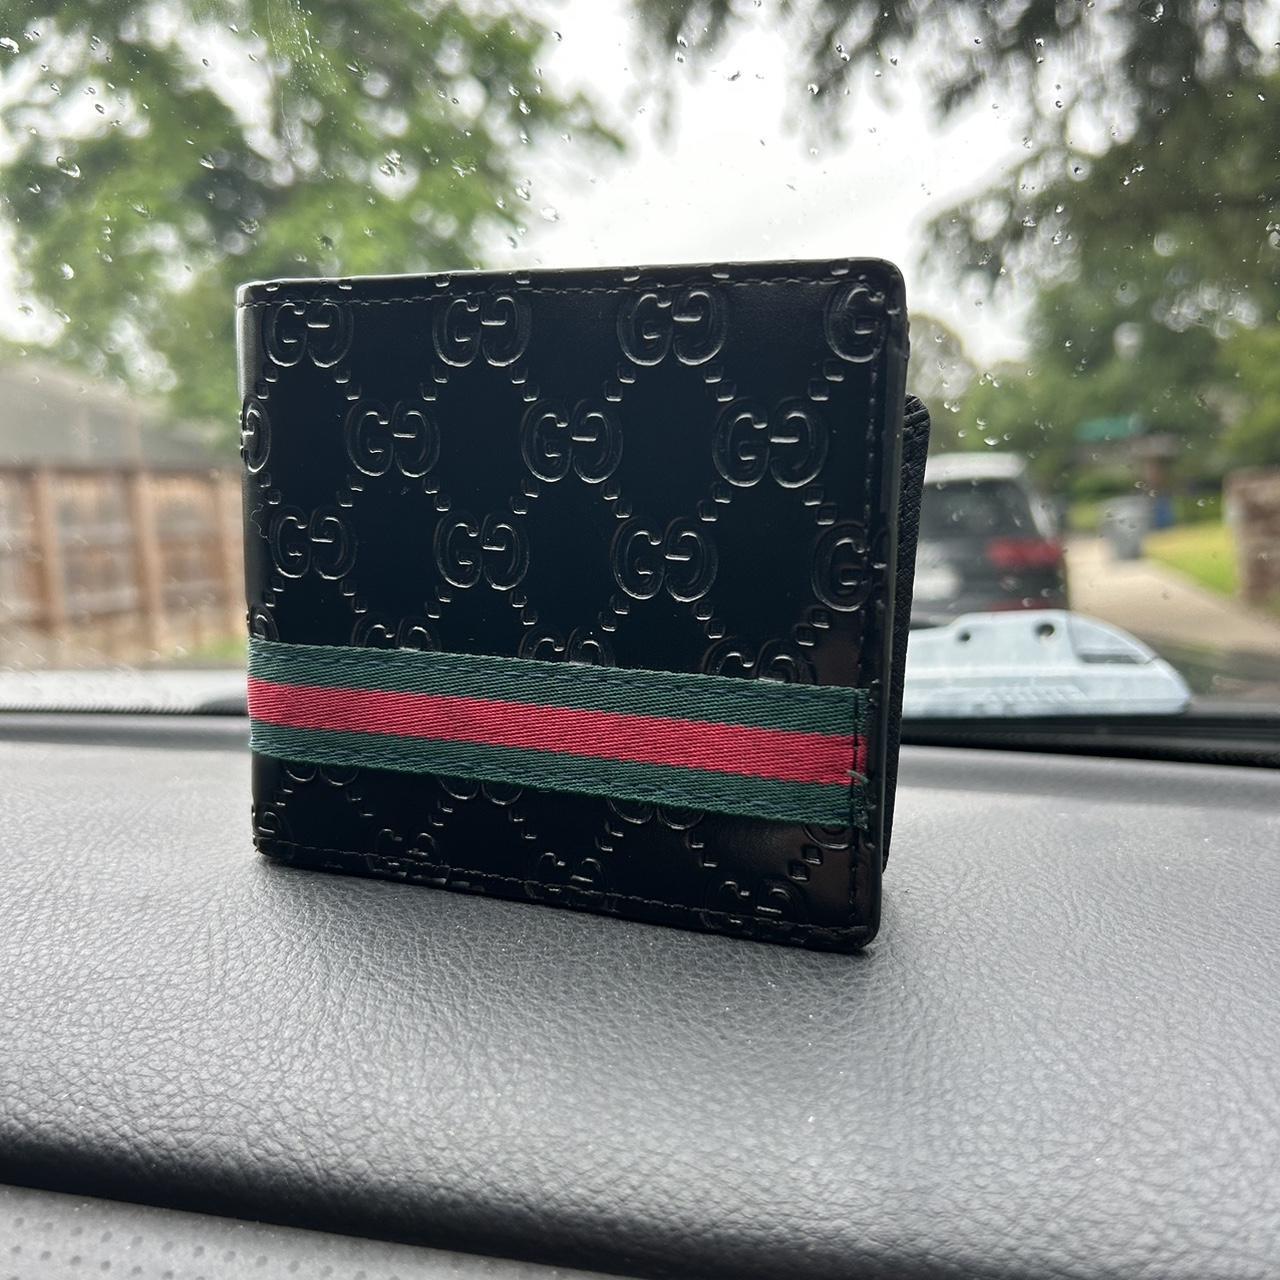 Gucci wallet, no box but is barley worn down., 9/10